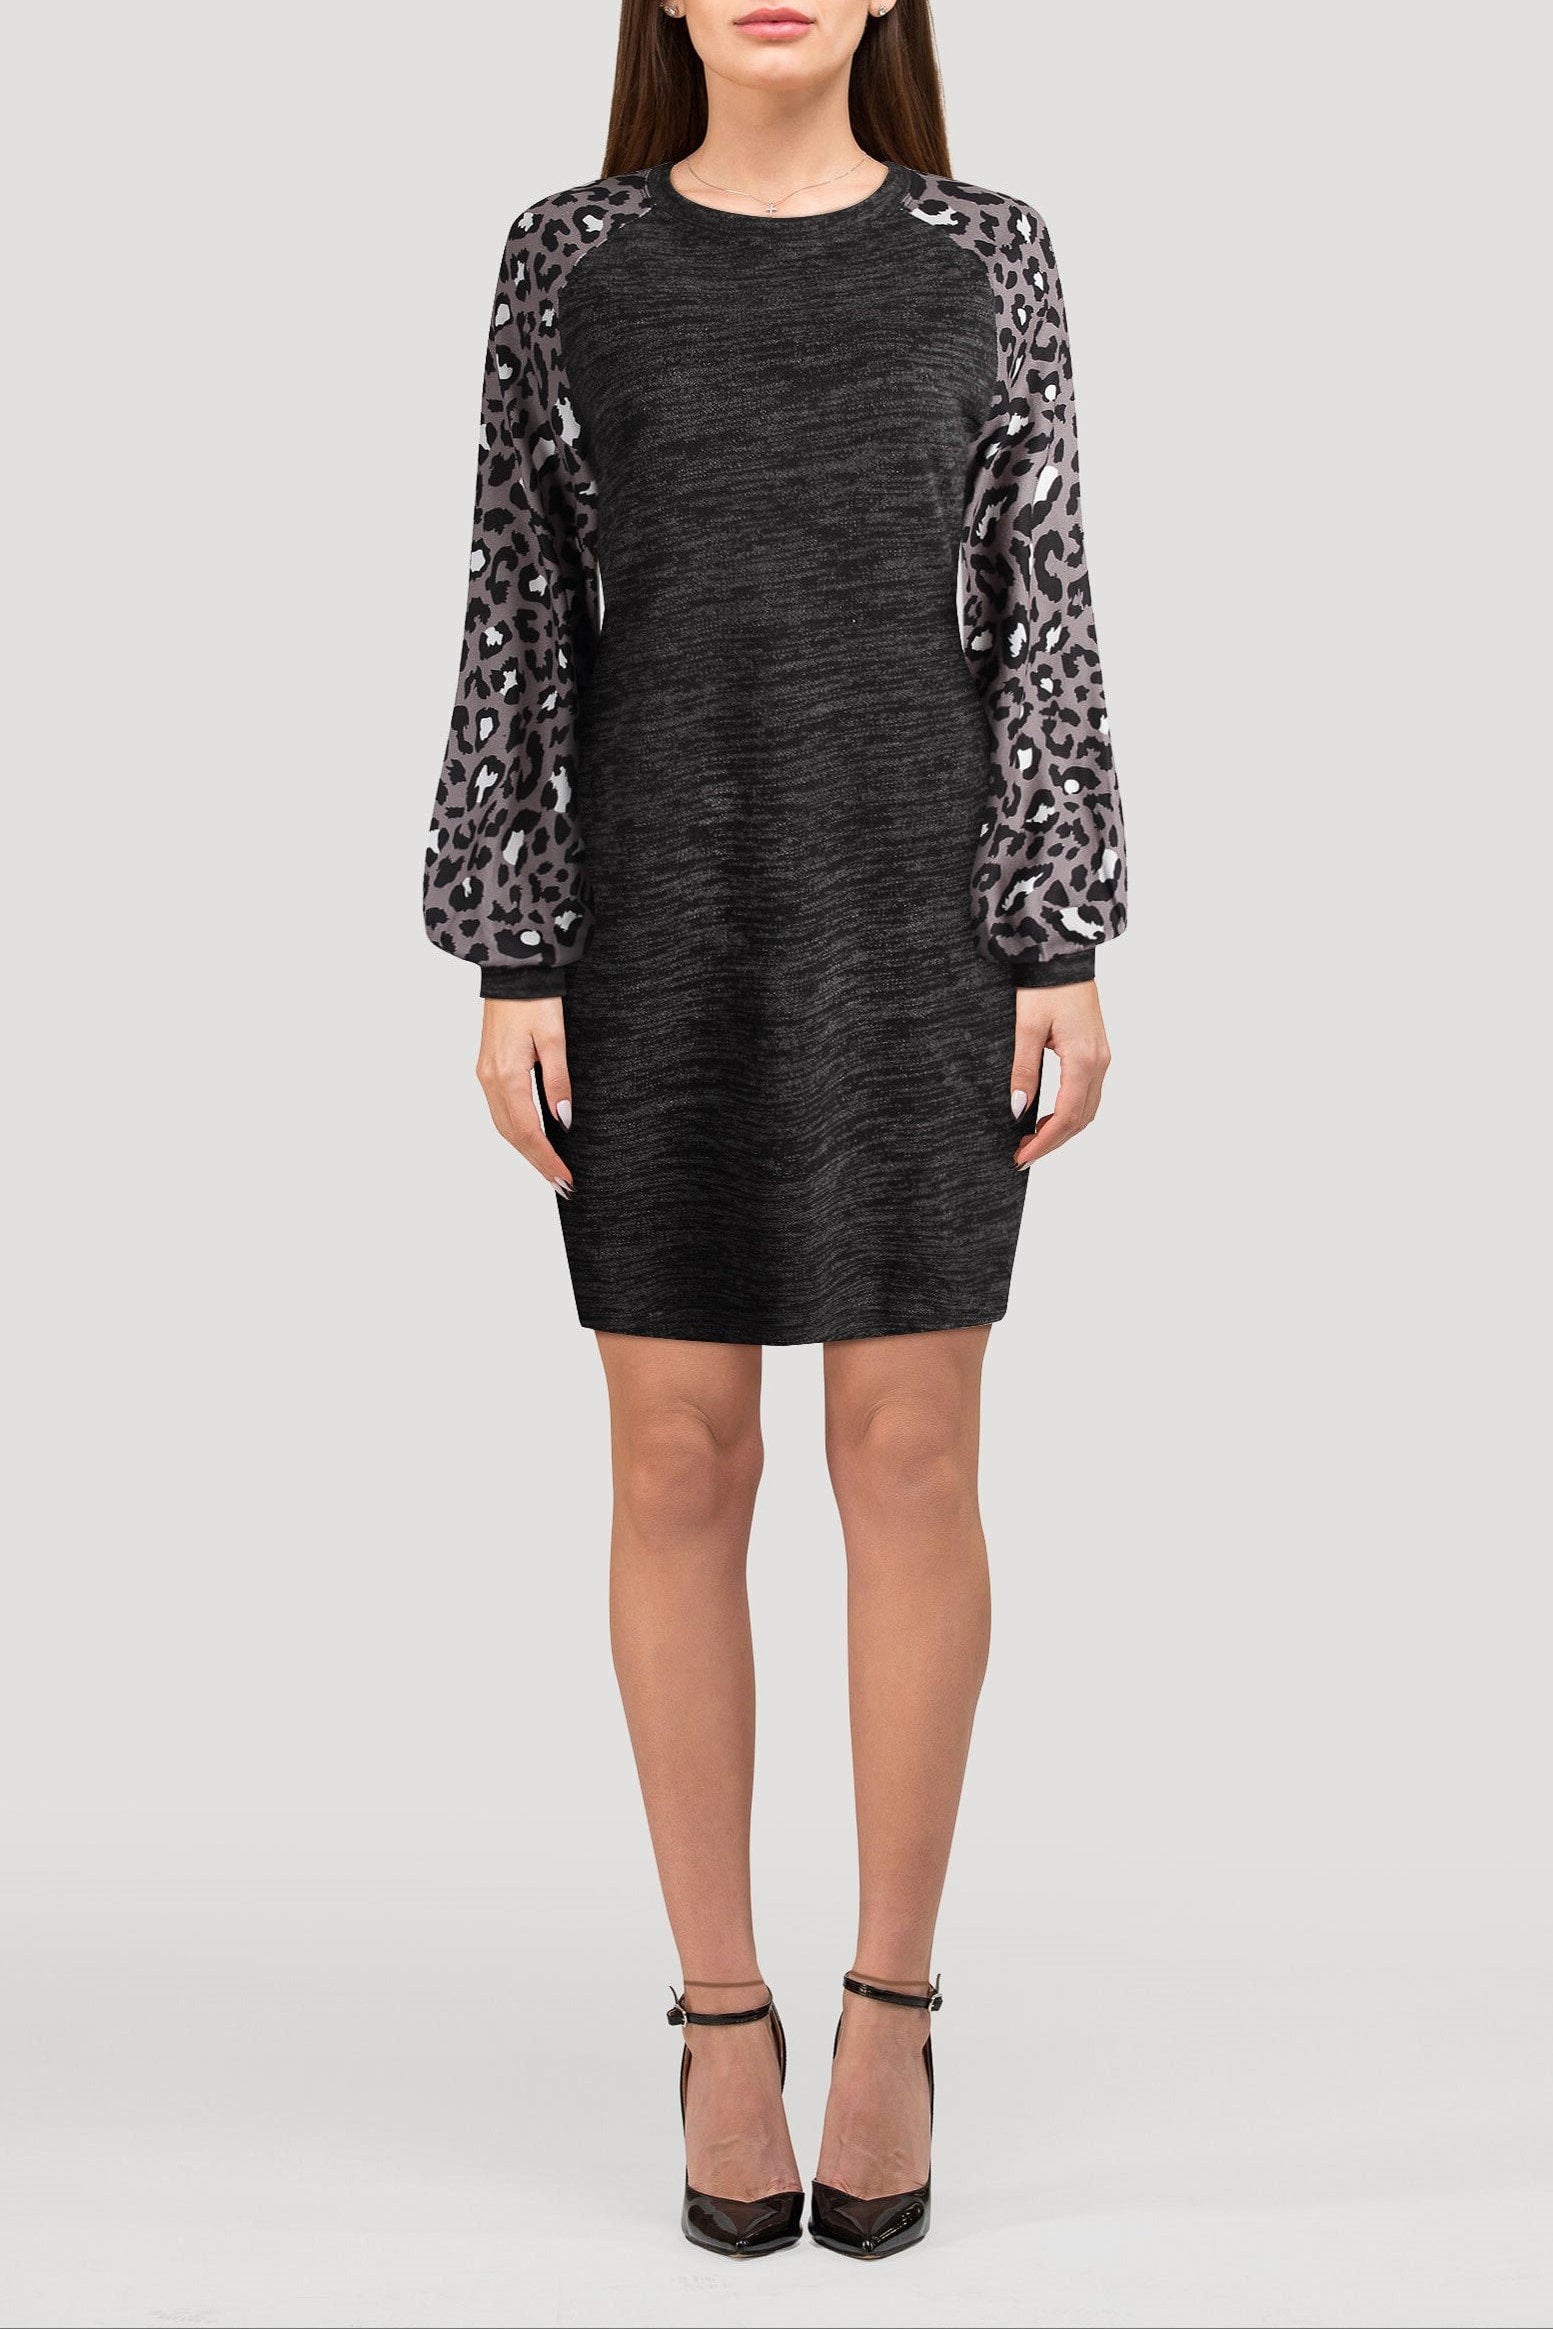 Darcey Leopard Sleeve Mini Dress - S / Black - Clothing